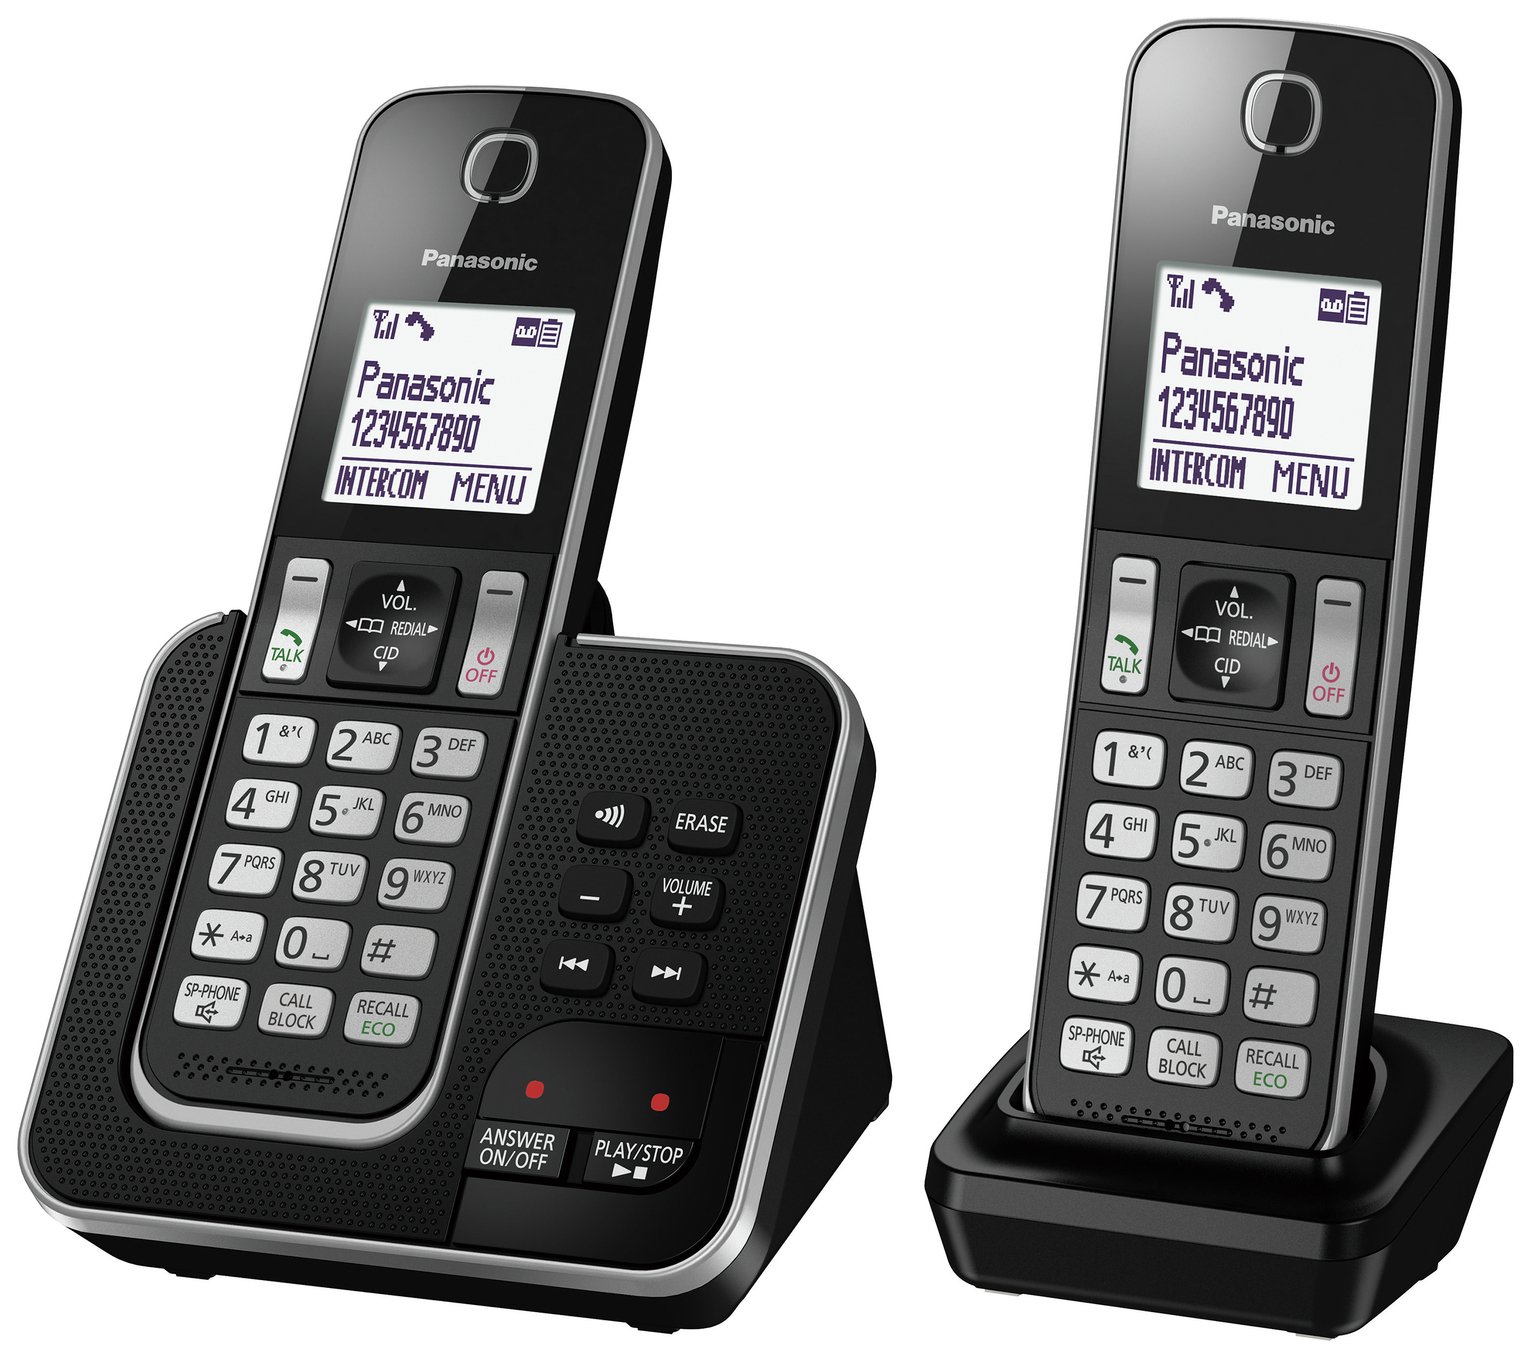 Panasonic Cordless Telephone with Answering Machine Review